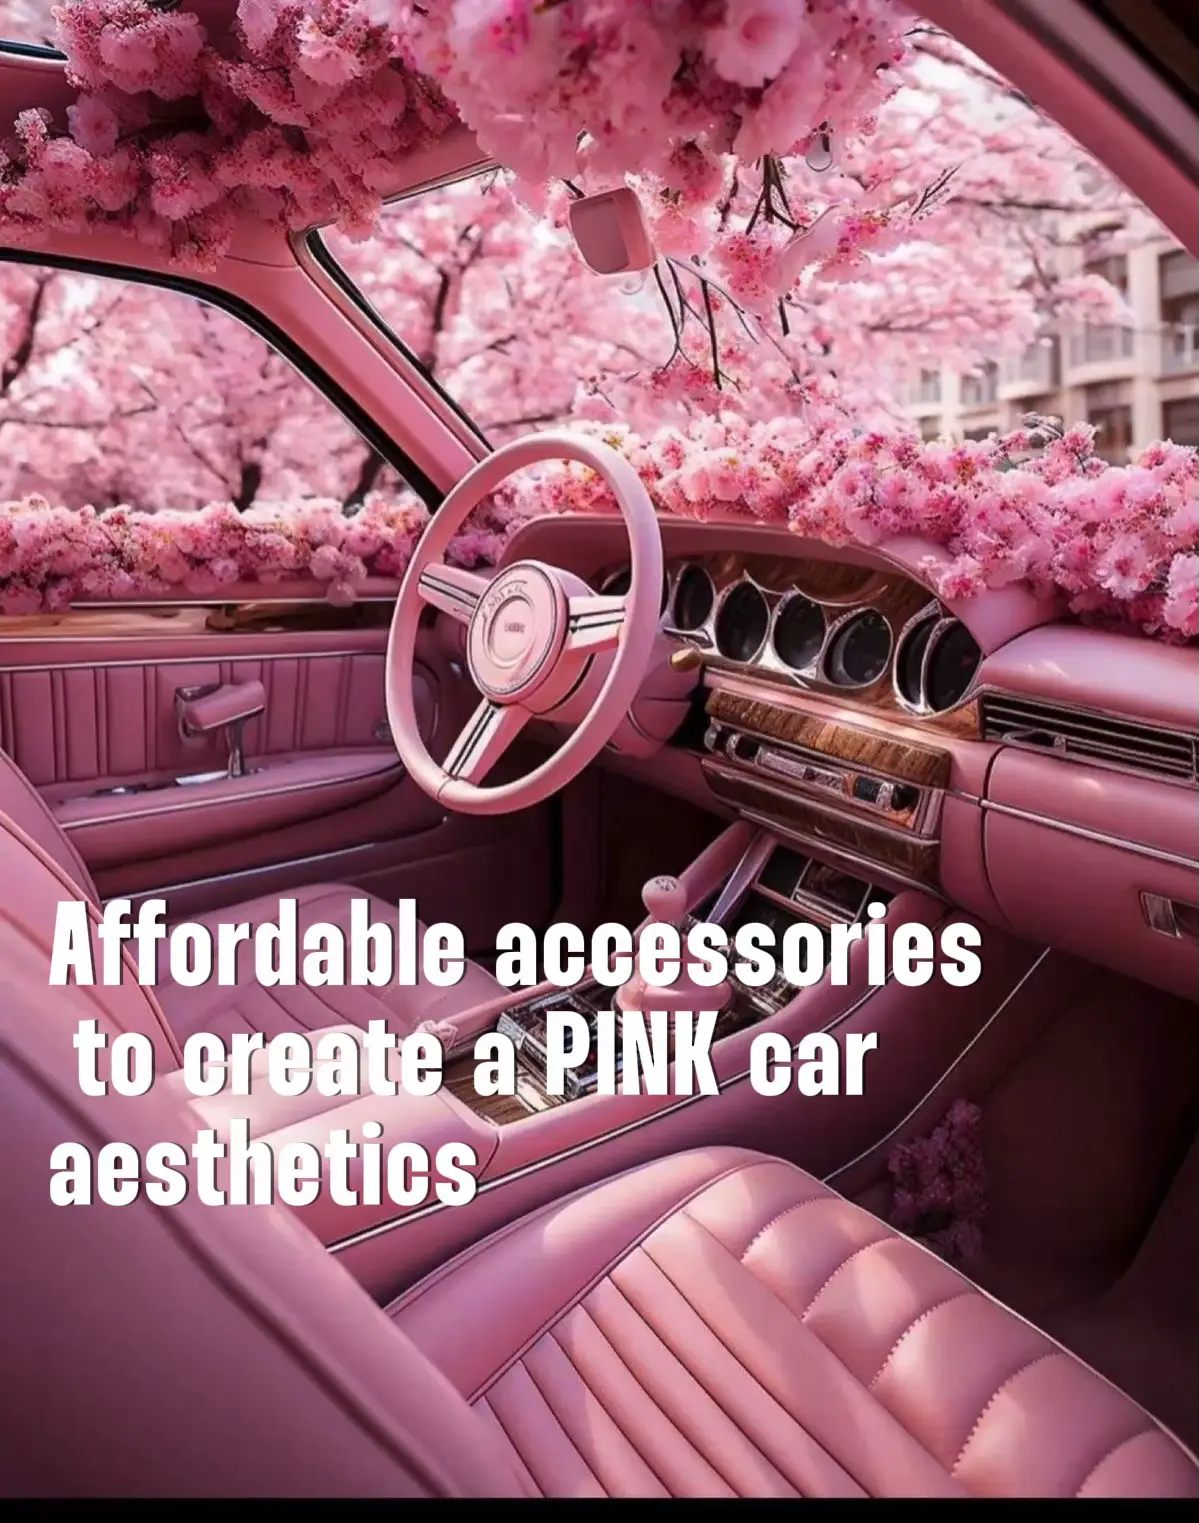 car aesthetic accessories - Lemon8 Search